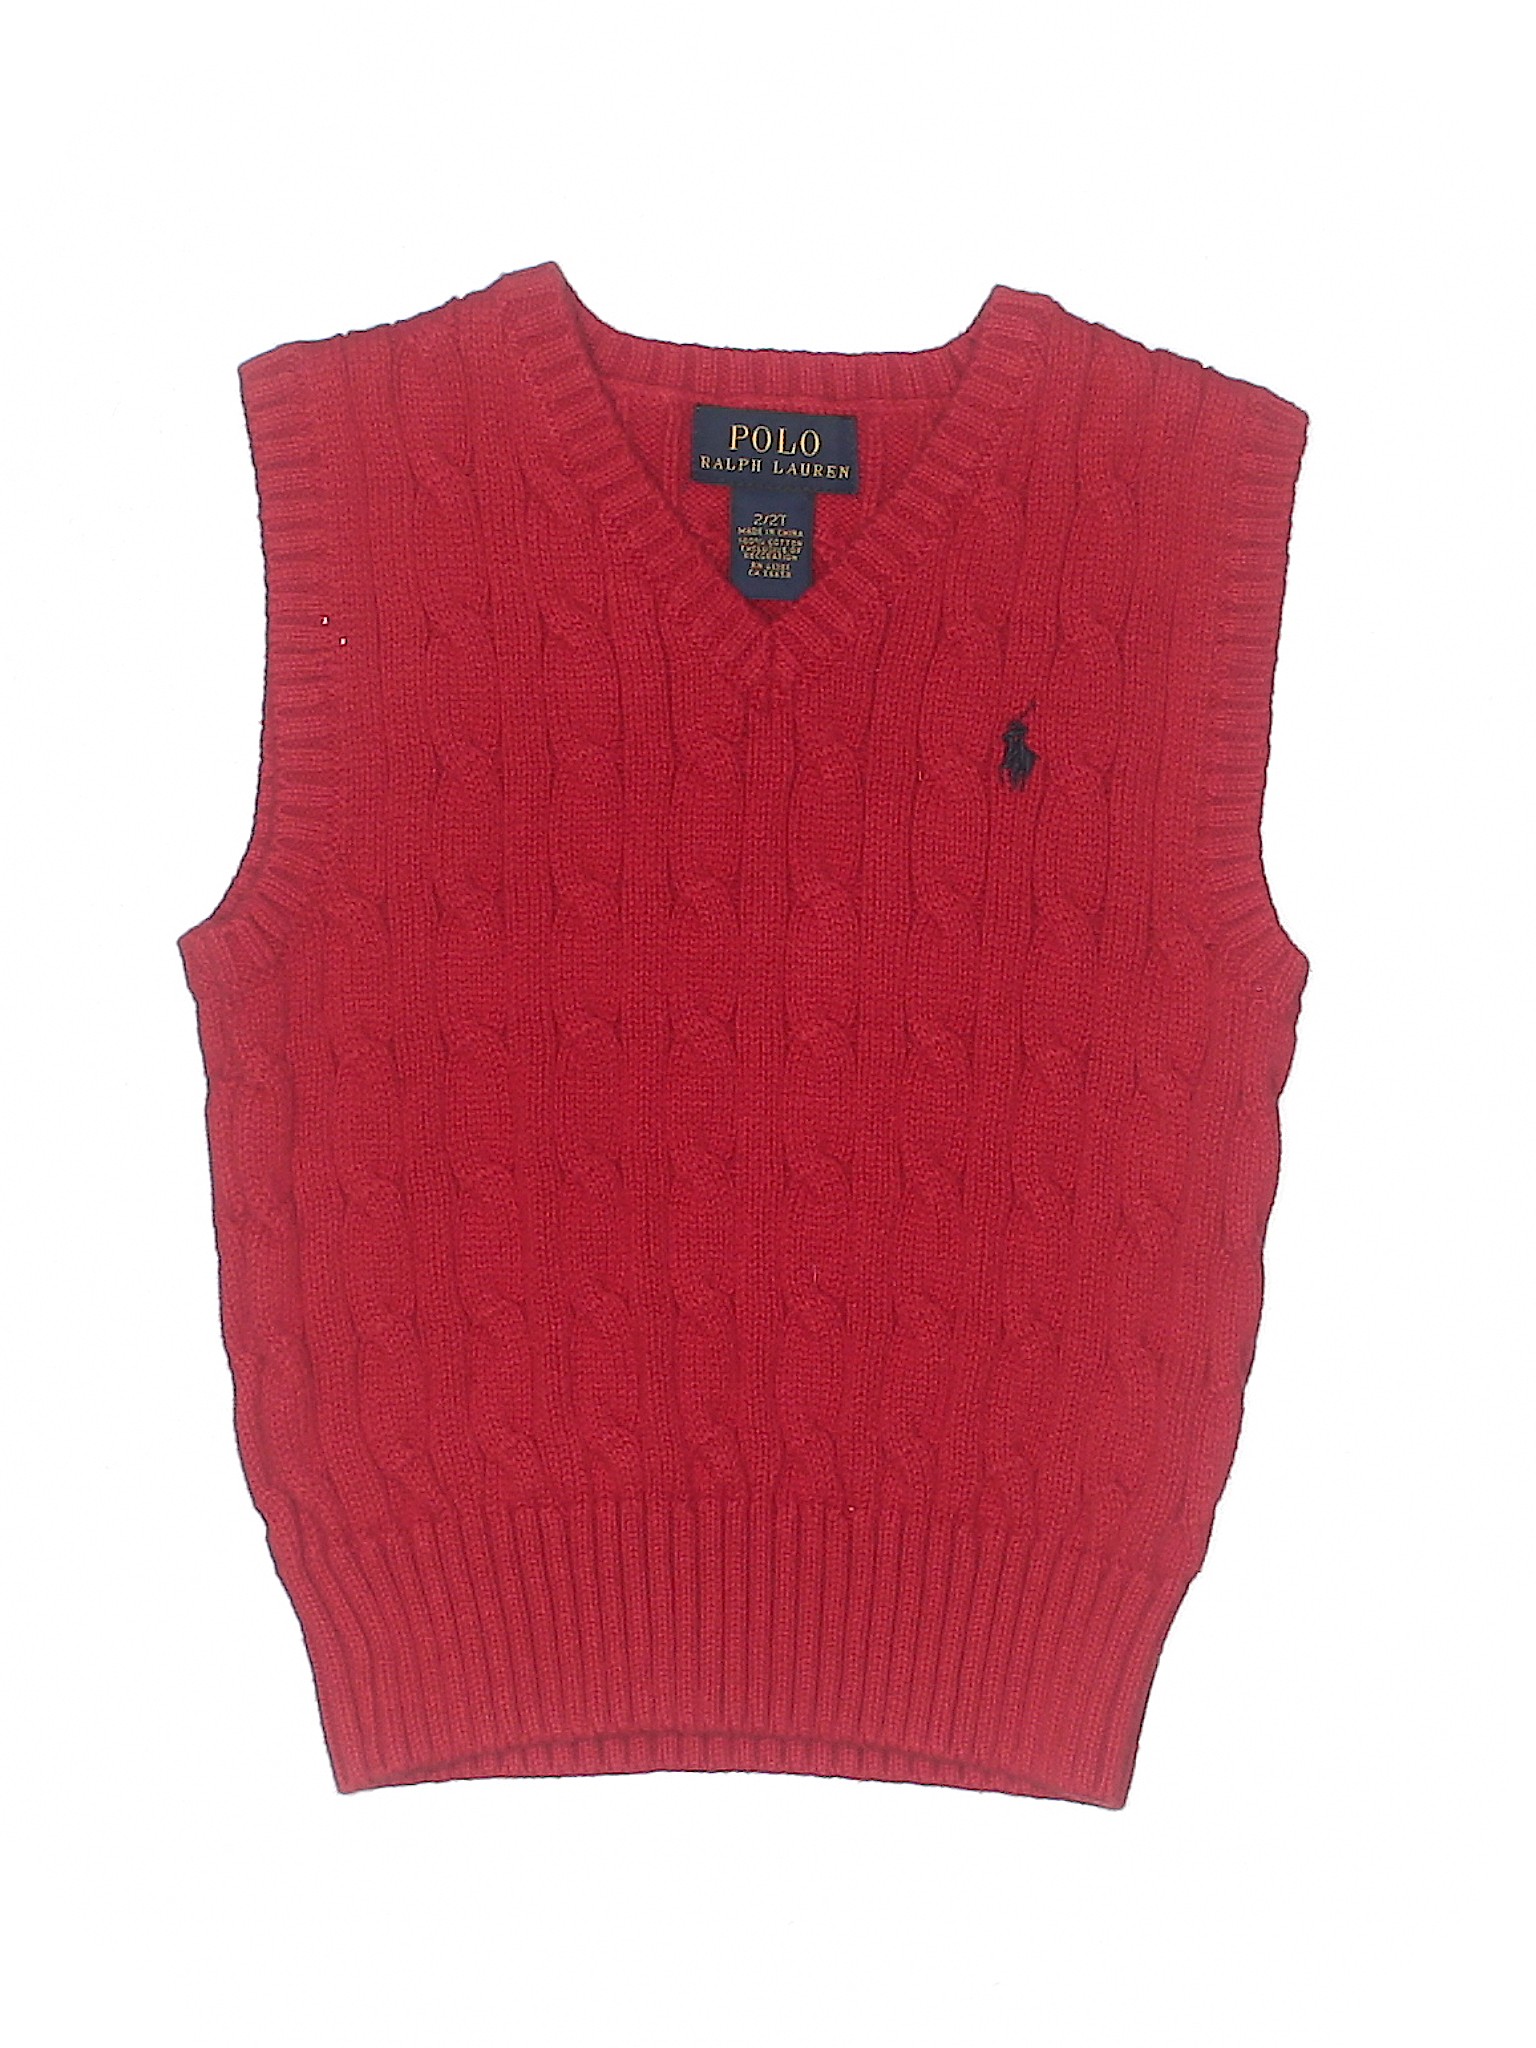 Polo by Ralph Lauren Boys Red Sweater Vest 2T | eBay